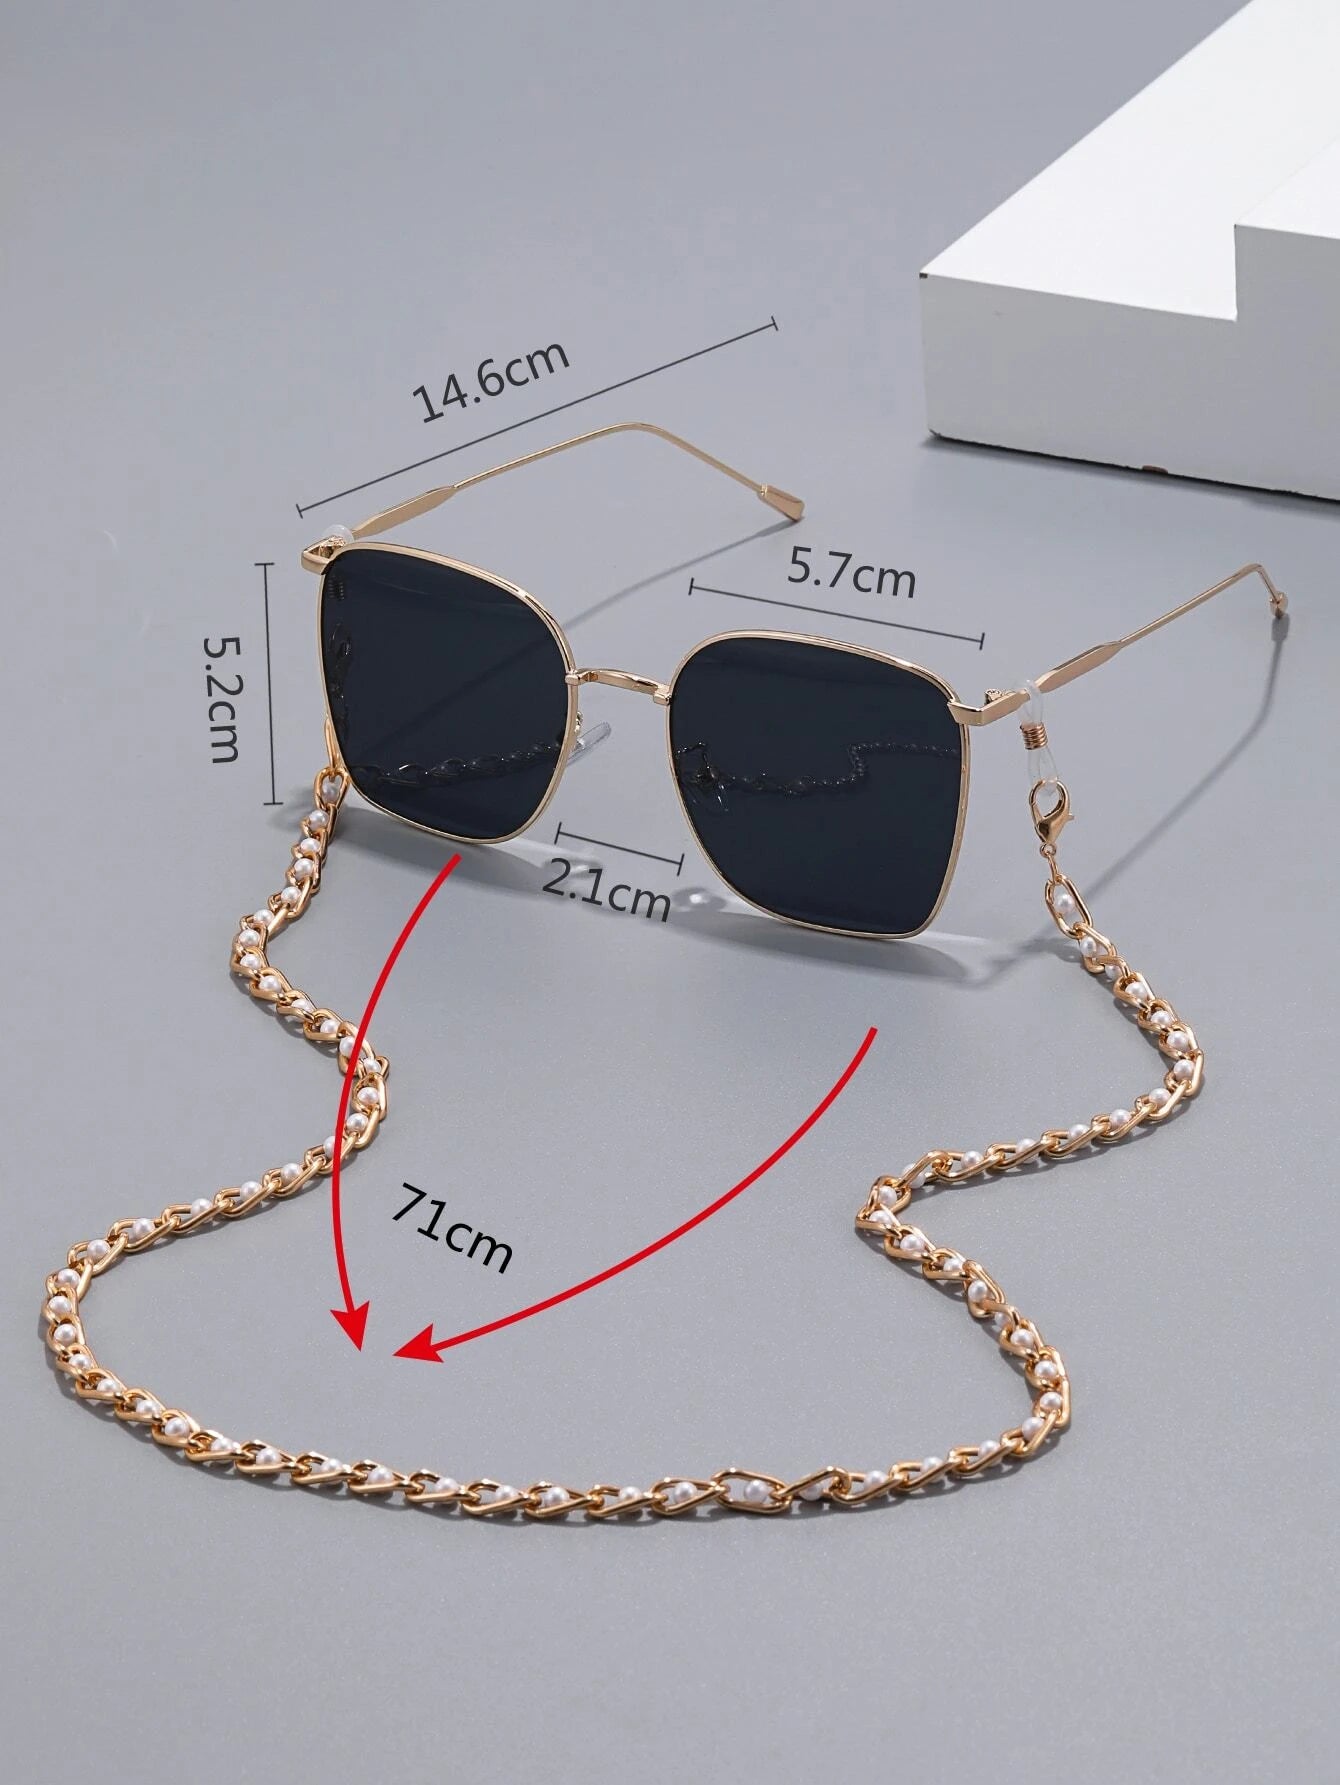 Metal Frame Fashion Glasses & Faux Pearl Decor Glasses Chain